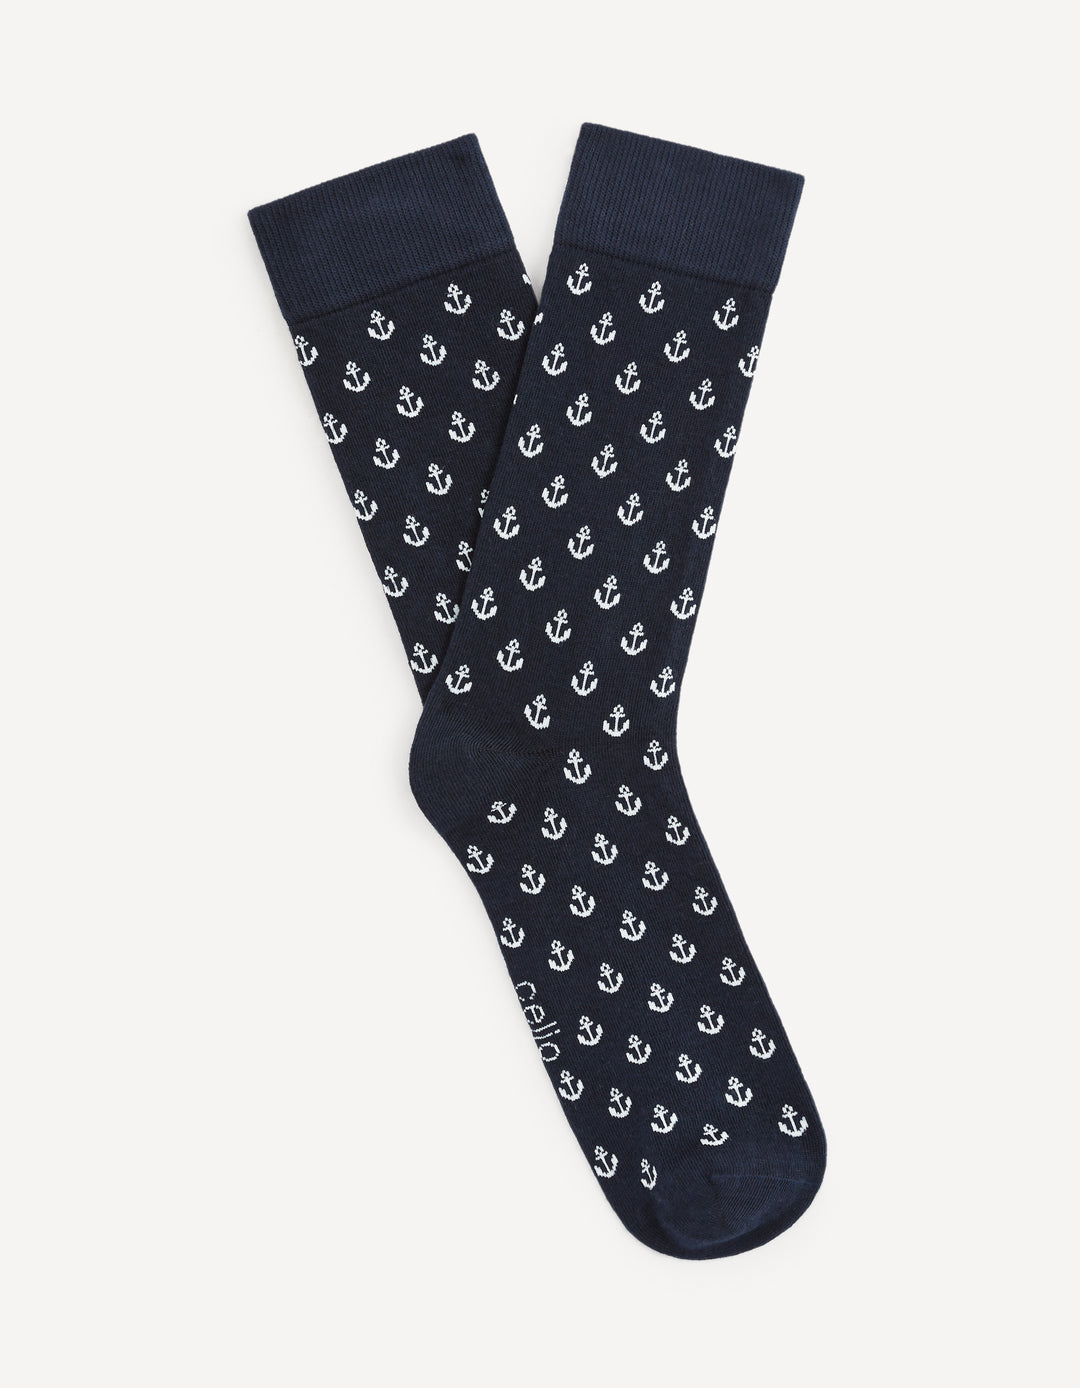 High anchor pattern socks